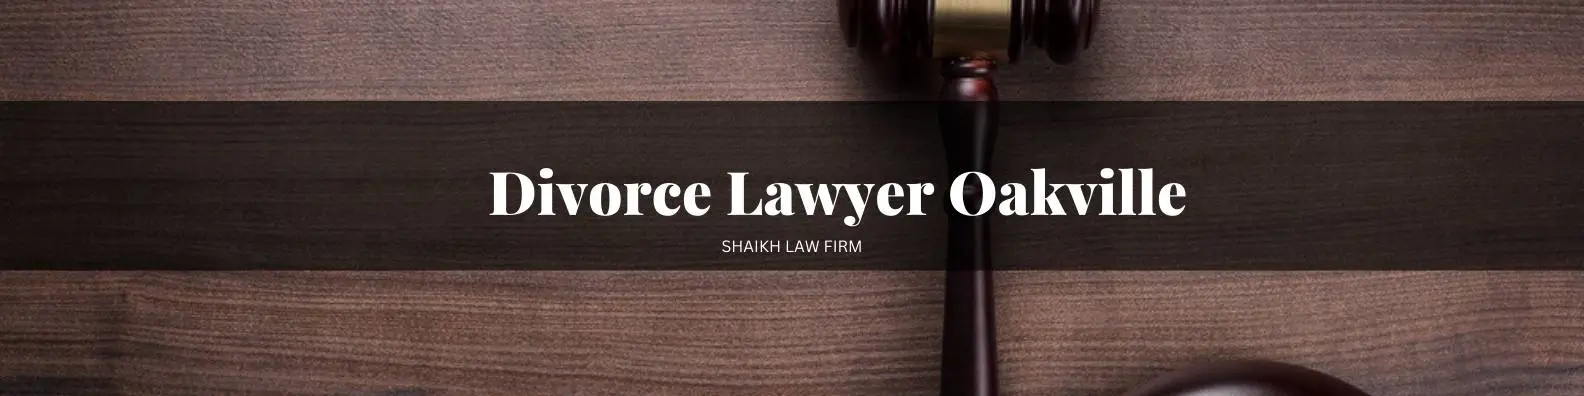 Divorce-Lawyer-Oakville